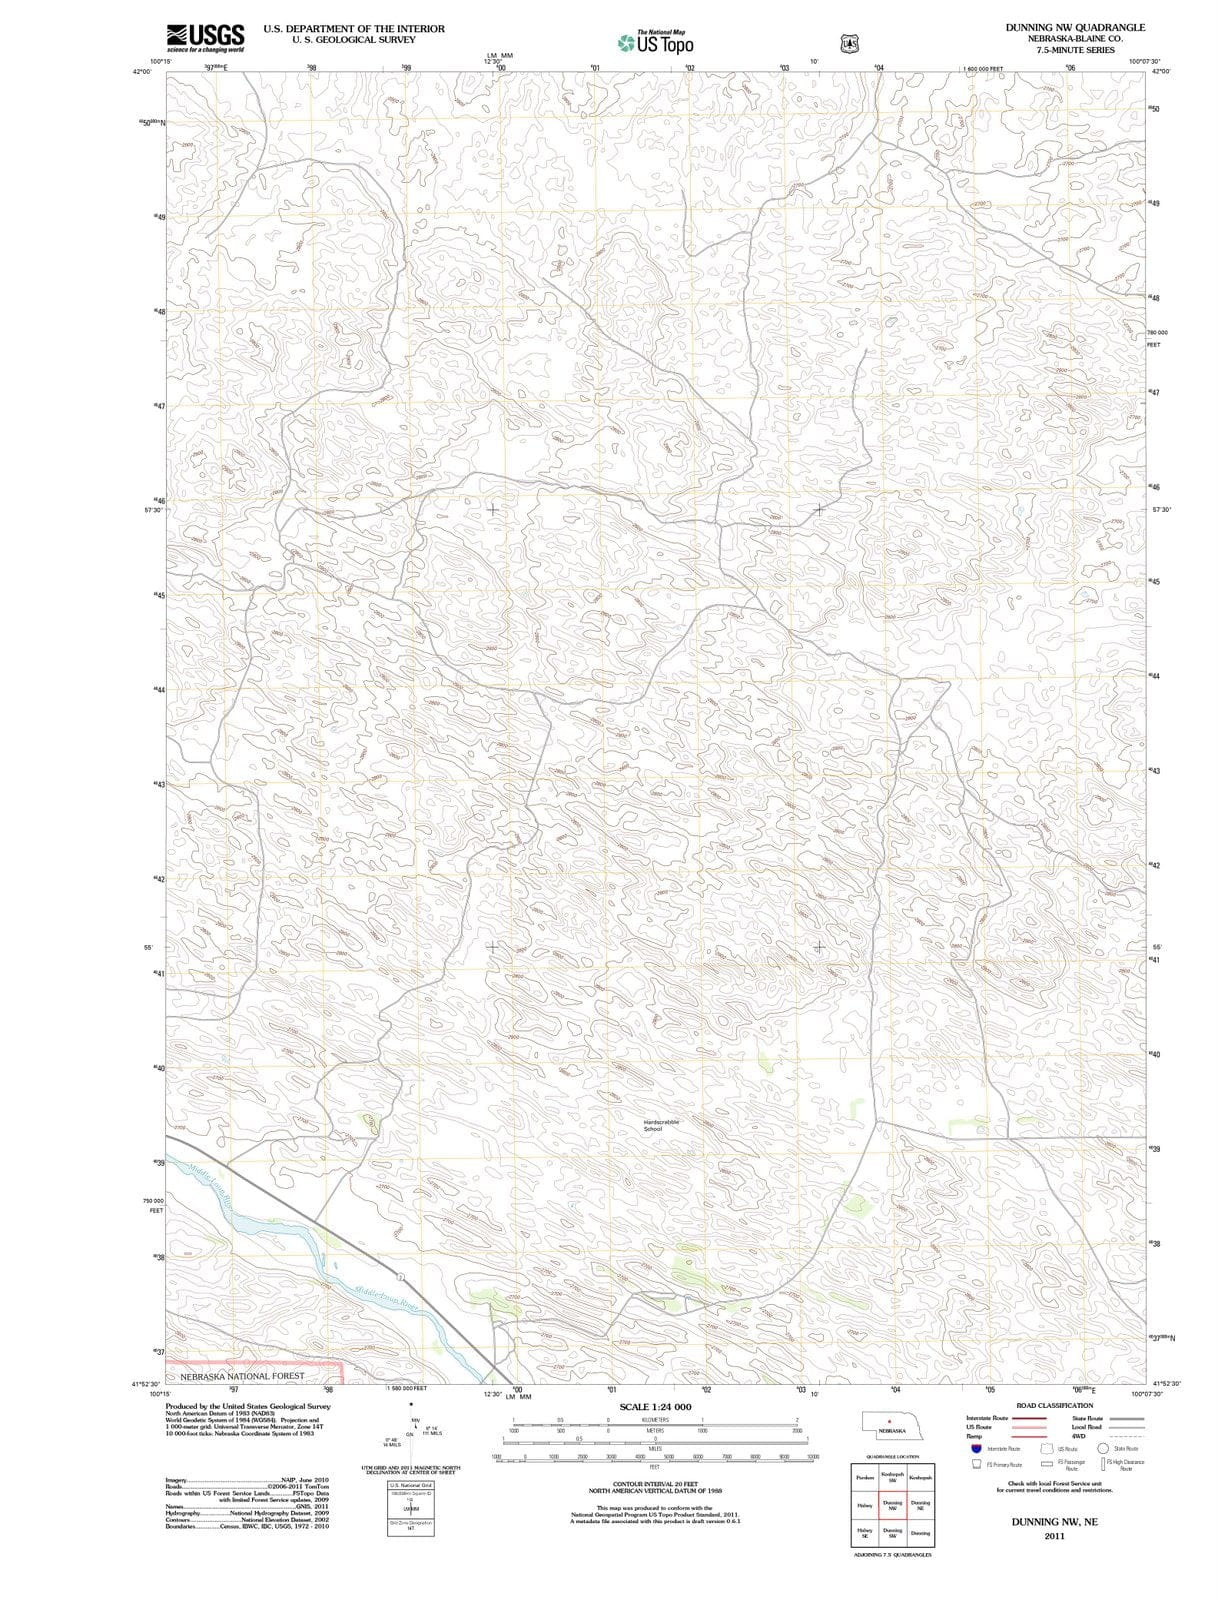 2011 Dunning, NE - Nebraska - USGS Topographic Map